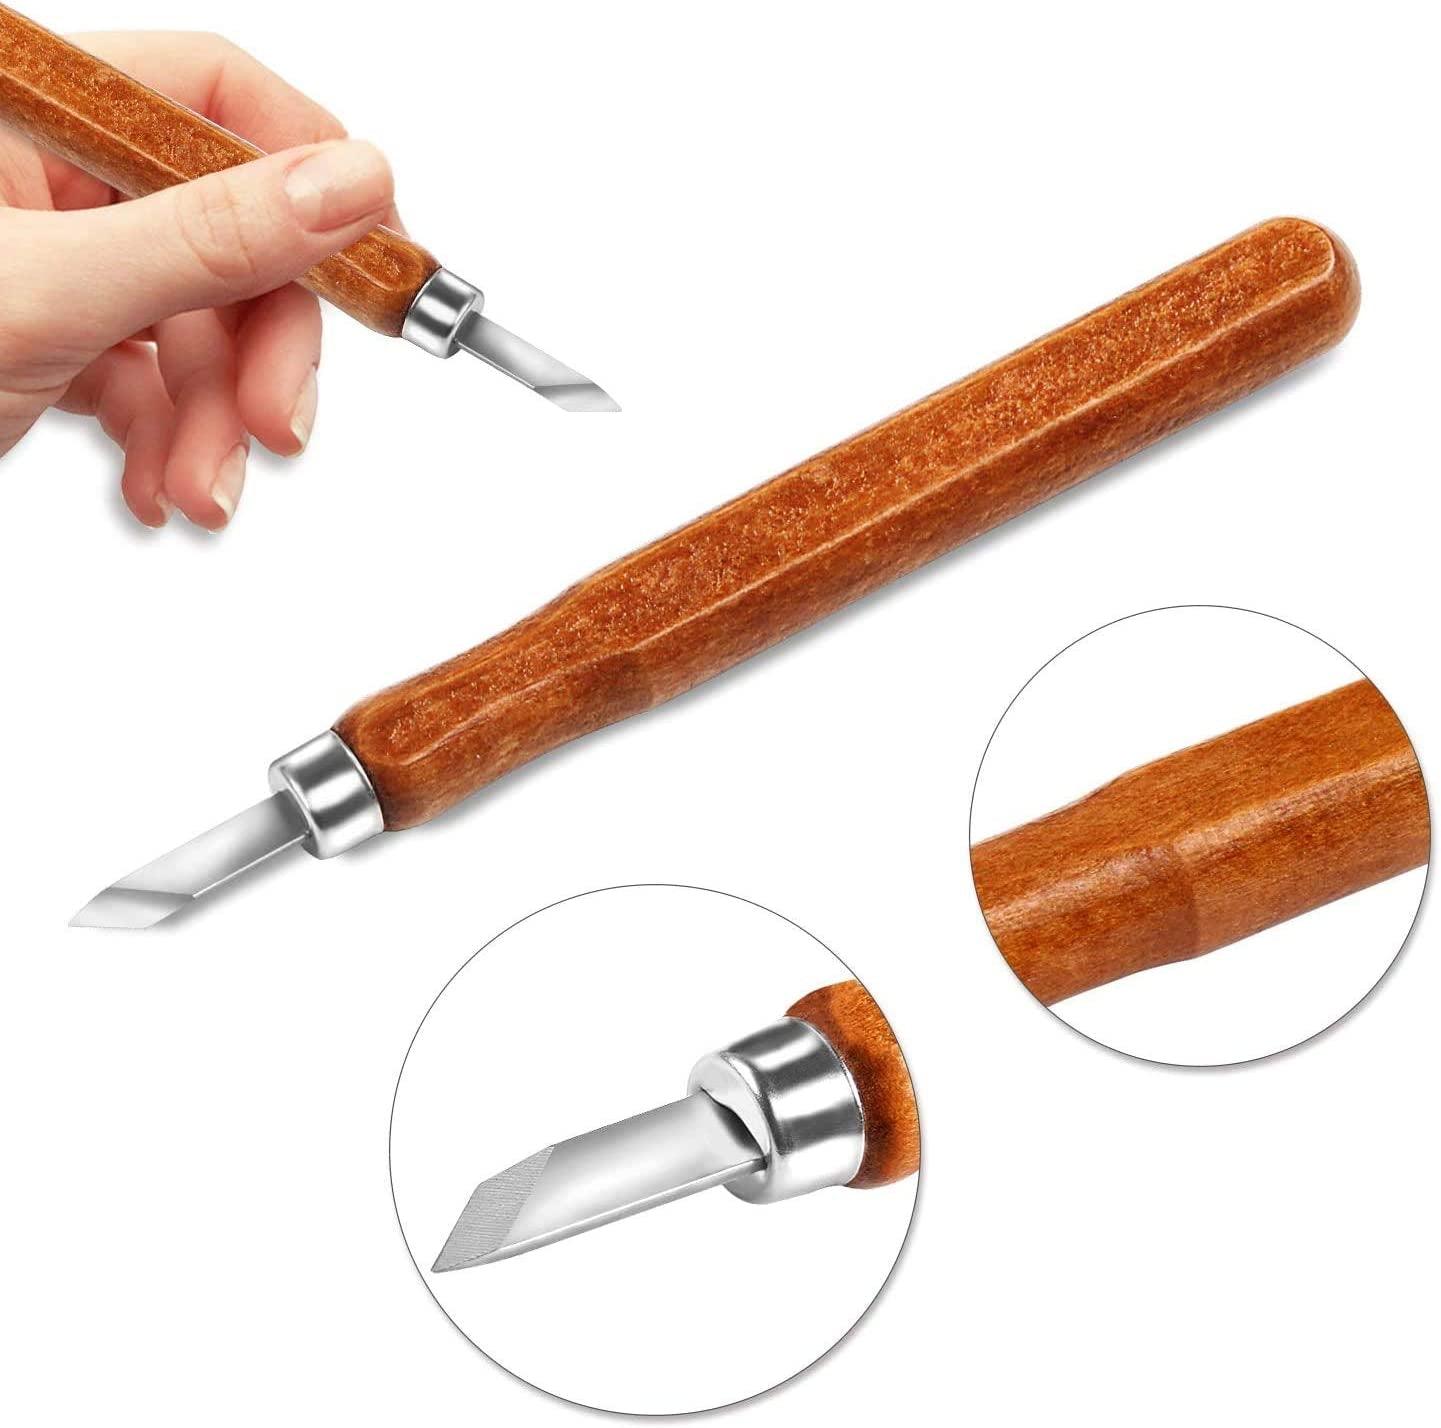 Wood Carving Knife Set - 20 PCS Hand Carving Tool Set for DIY Sculpture Carpenter Experts & Beginners - WoodArtSupply